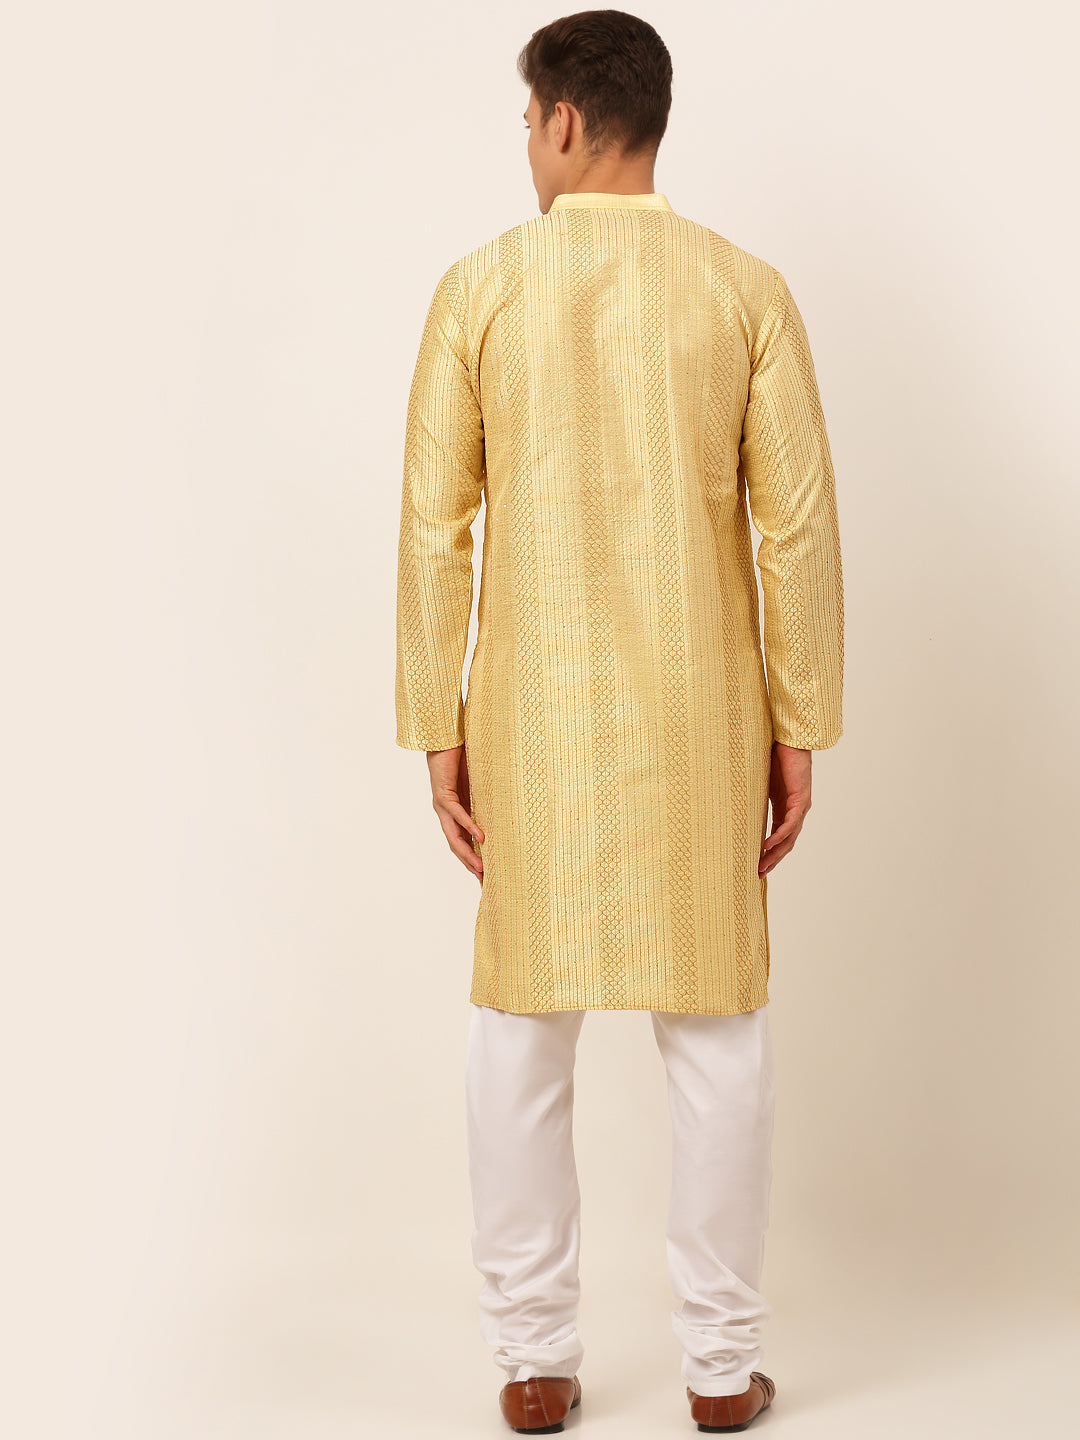 Men's Golden Embroiderd Kurta Pyjama ( Jokp 671 Golden ) - Virat Fashions